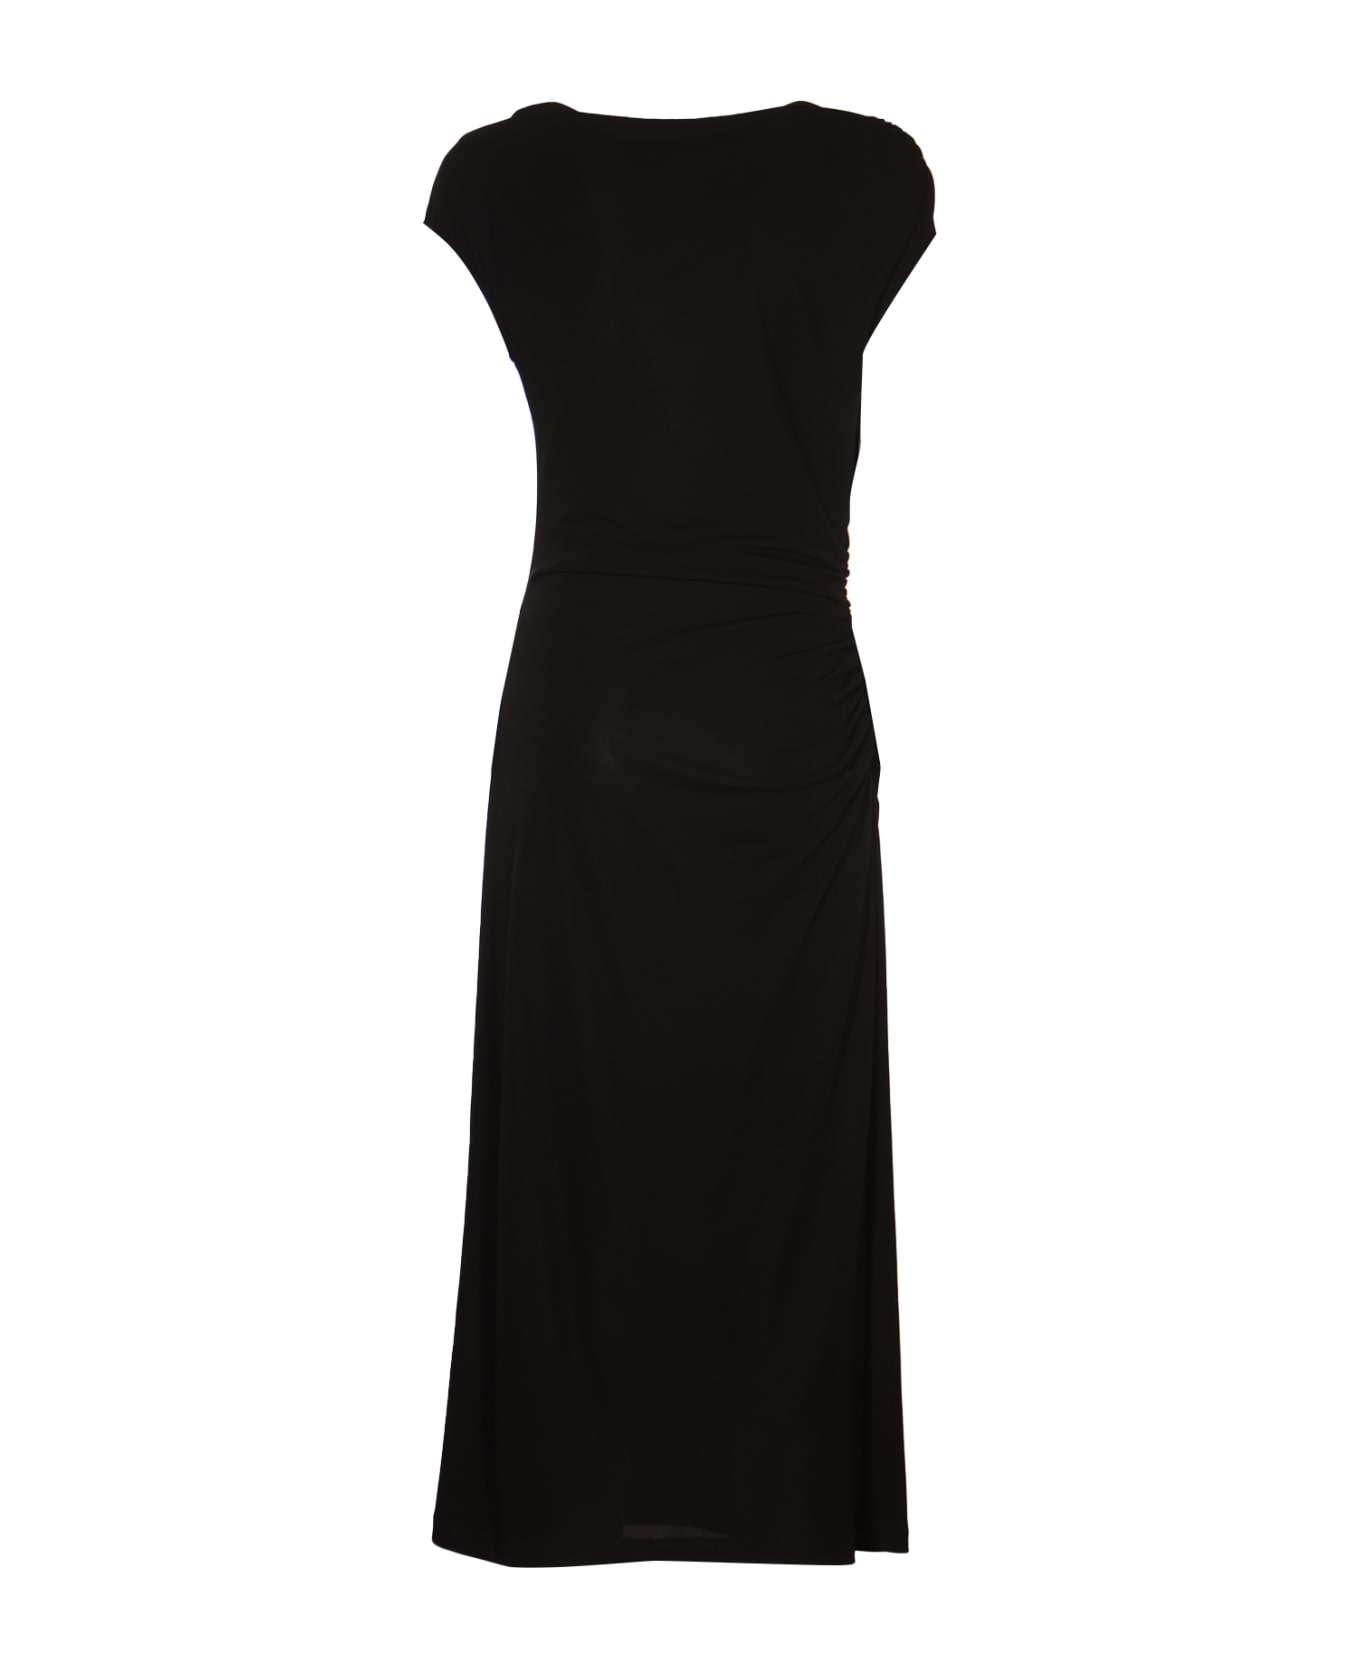 Alberta Ferretti Cappped Sleeve Dress - Black 